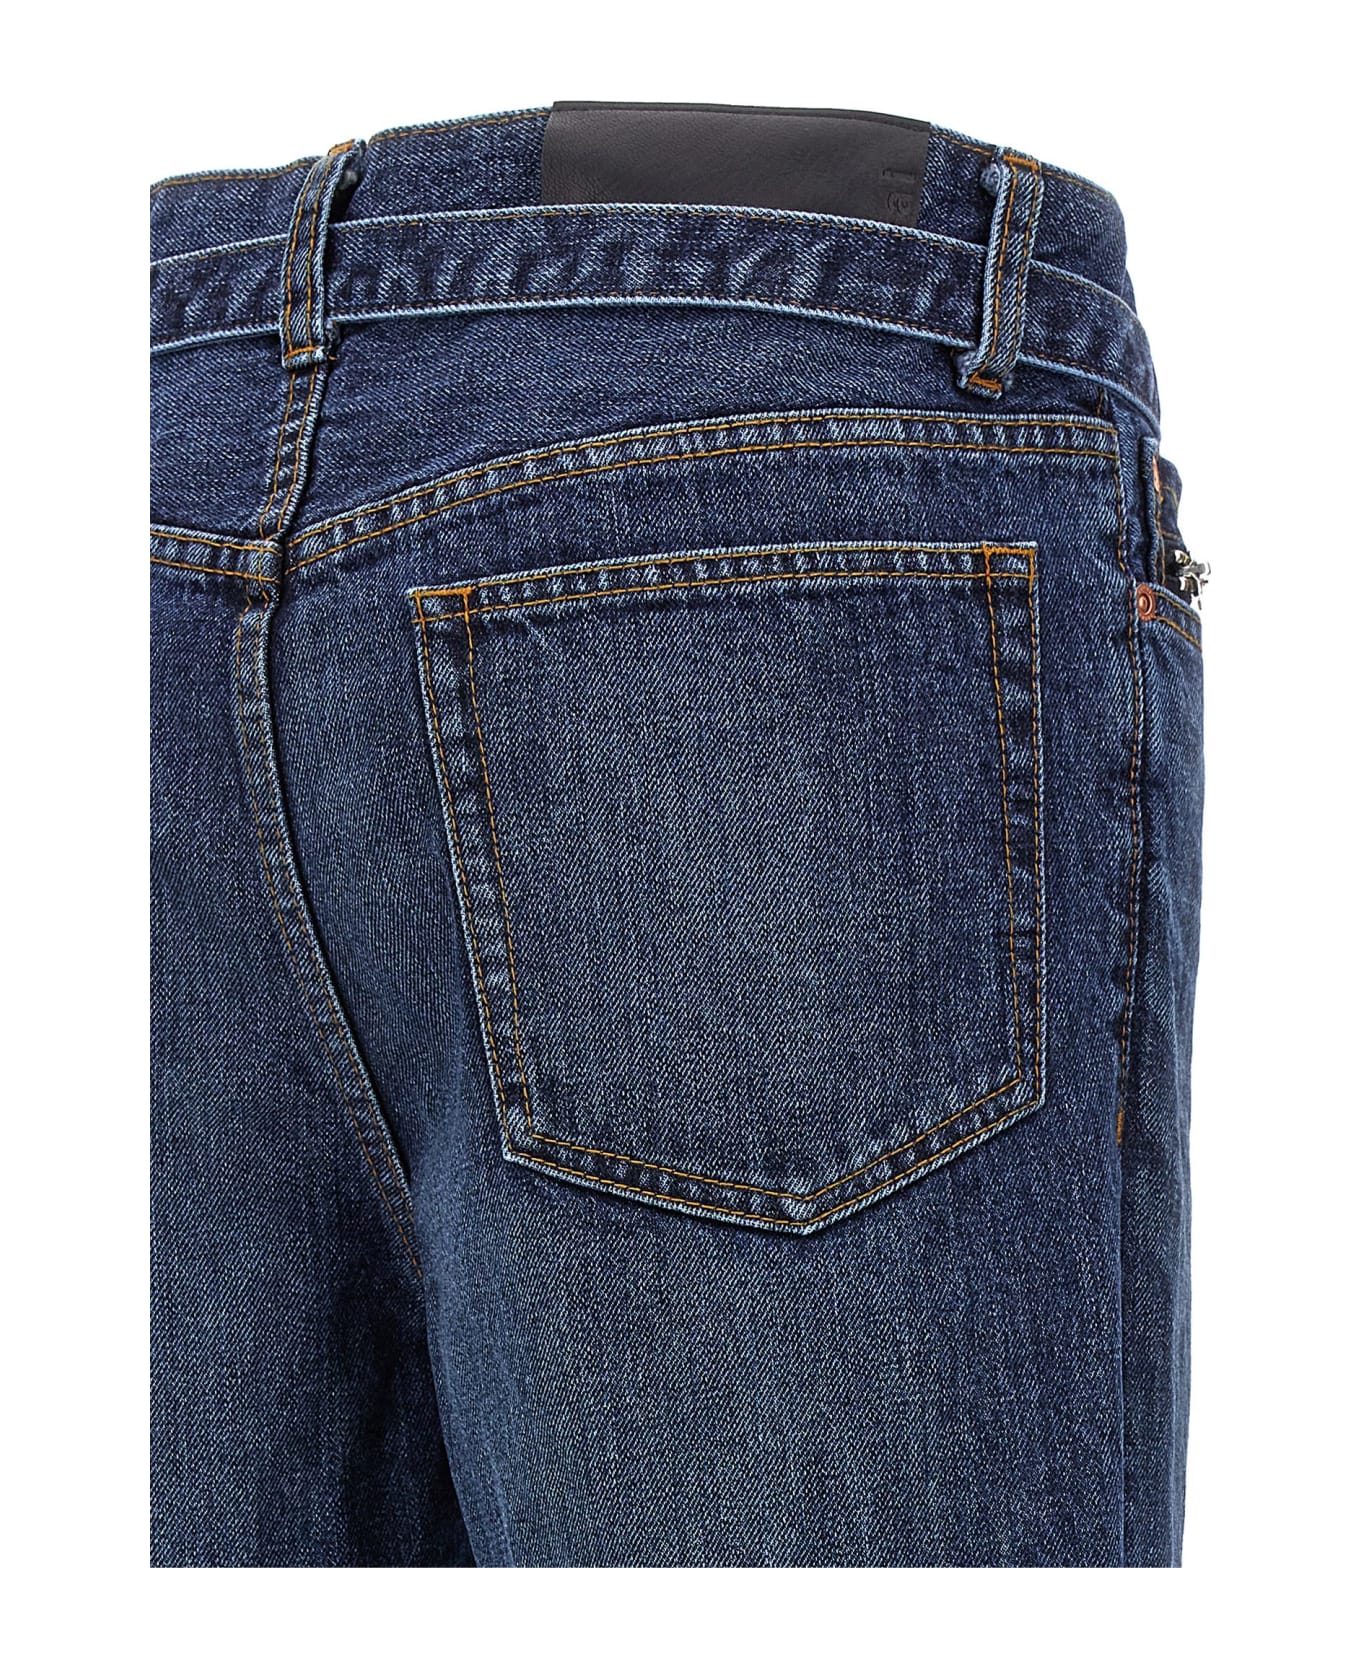 Sacai Bootcut Jeans - Blue デニム